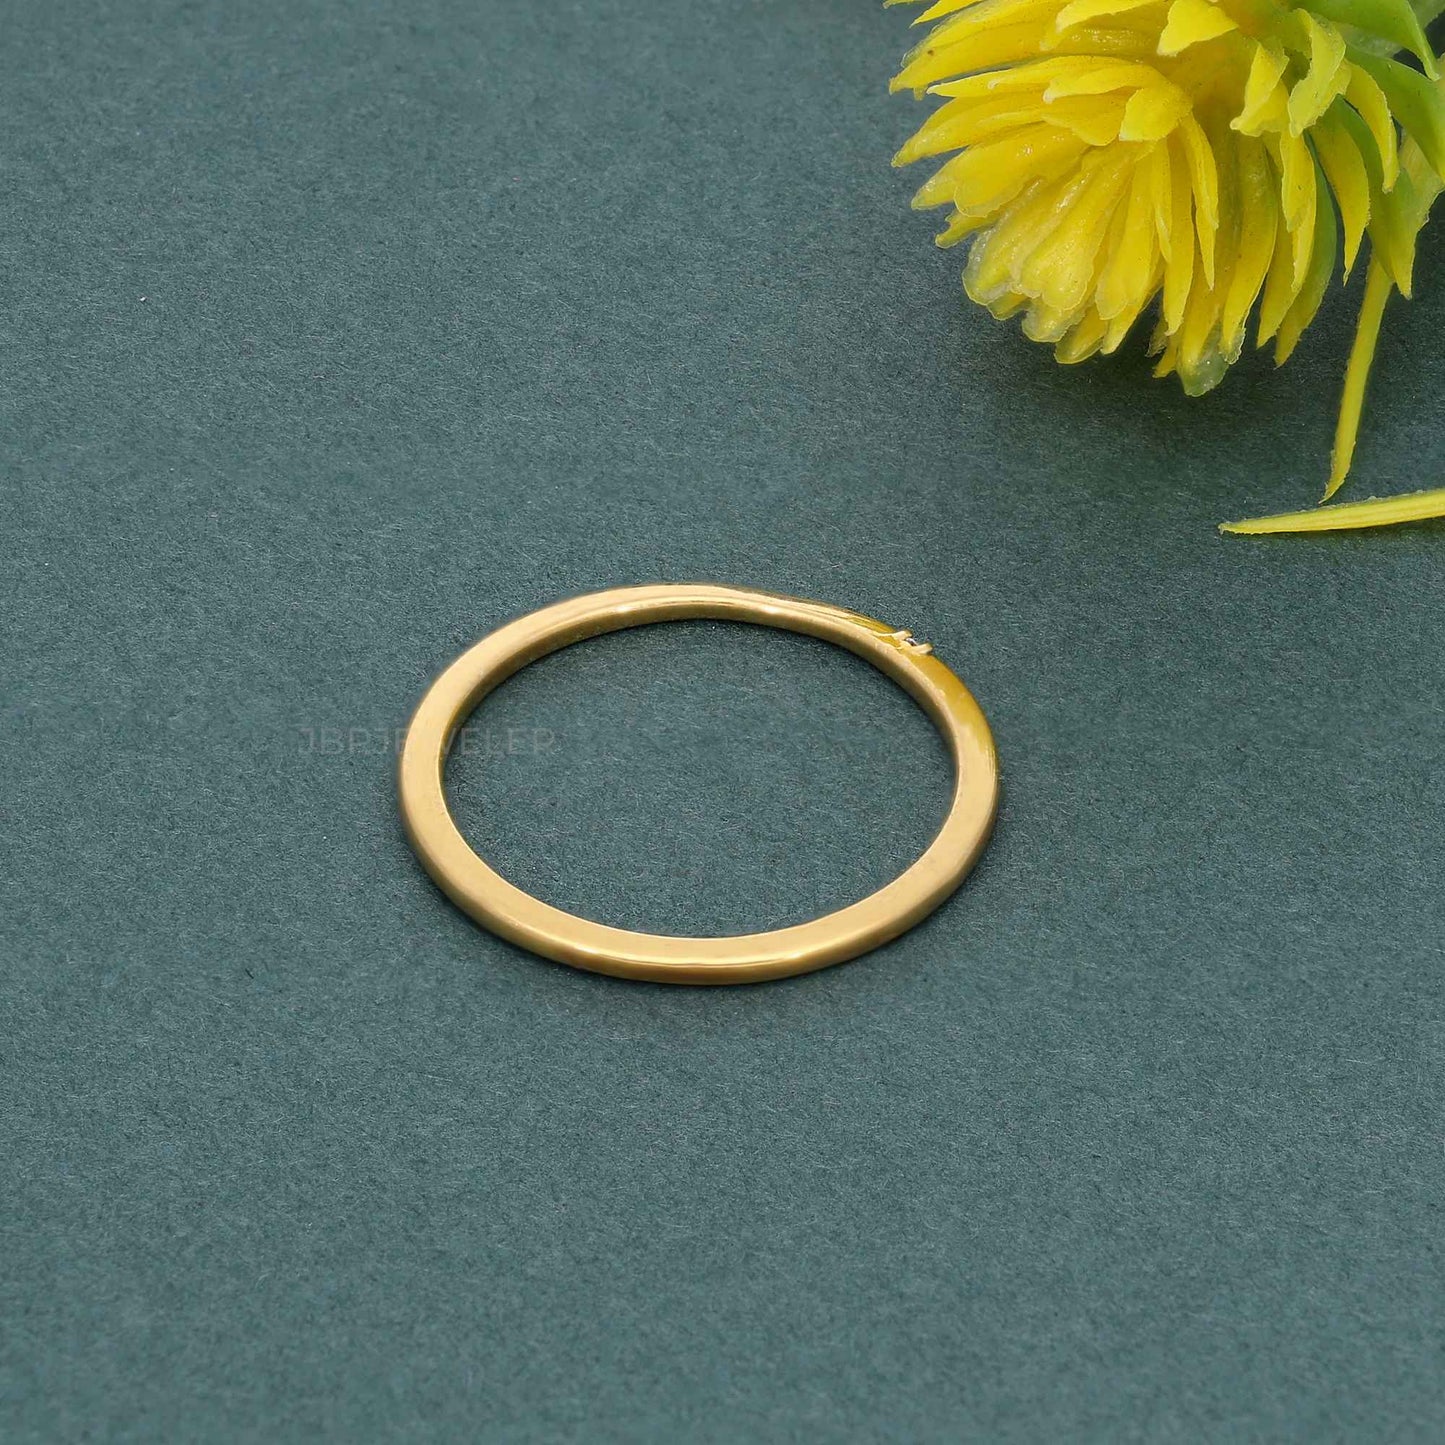 Minimalist Thin Single Moissanite Diamond Wedding Ring